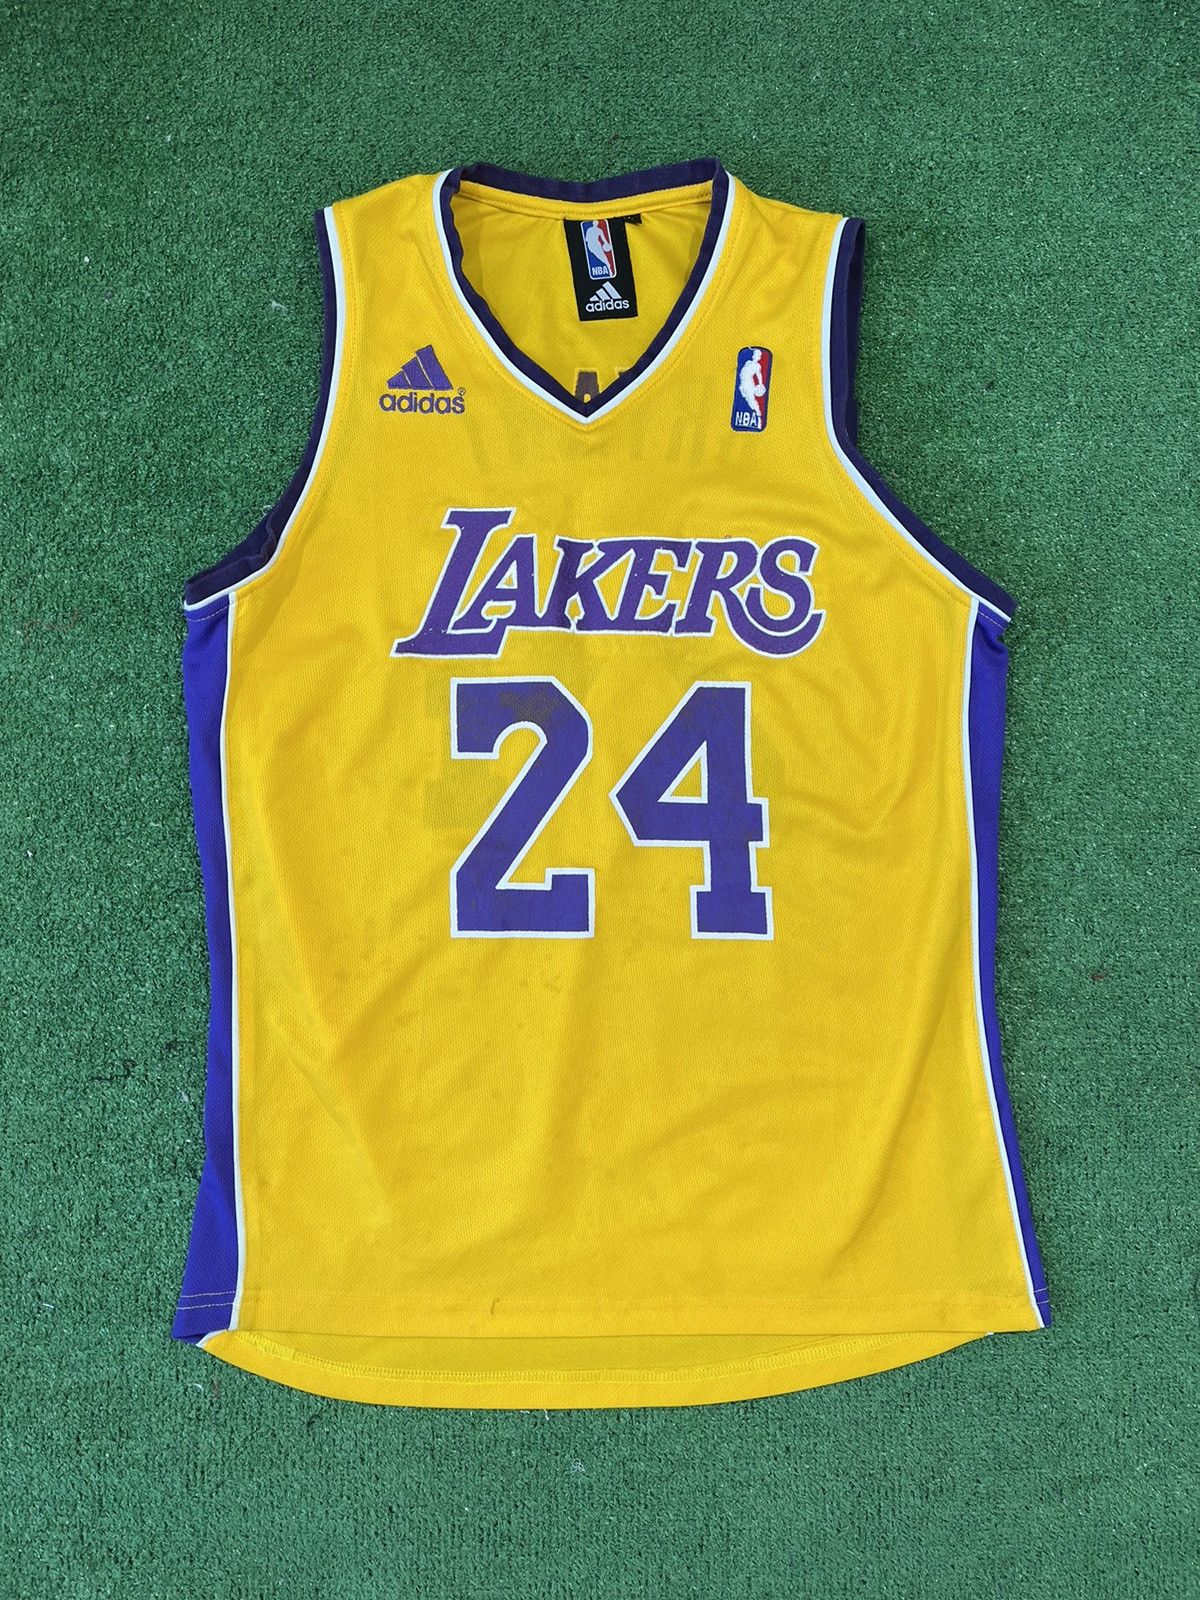 adidas Lakers Kobe Bryant 24 White Swingman Jersey Mens Sz 52